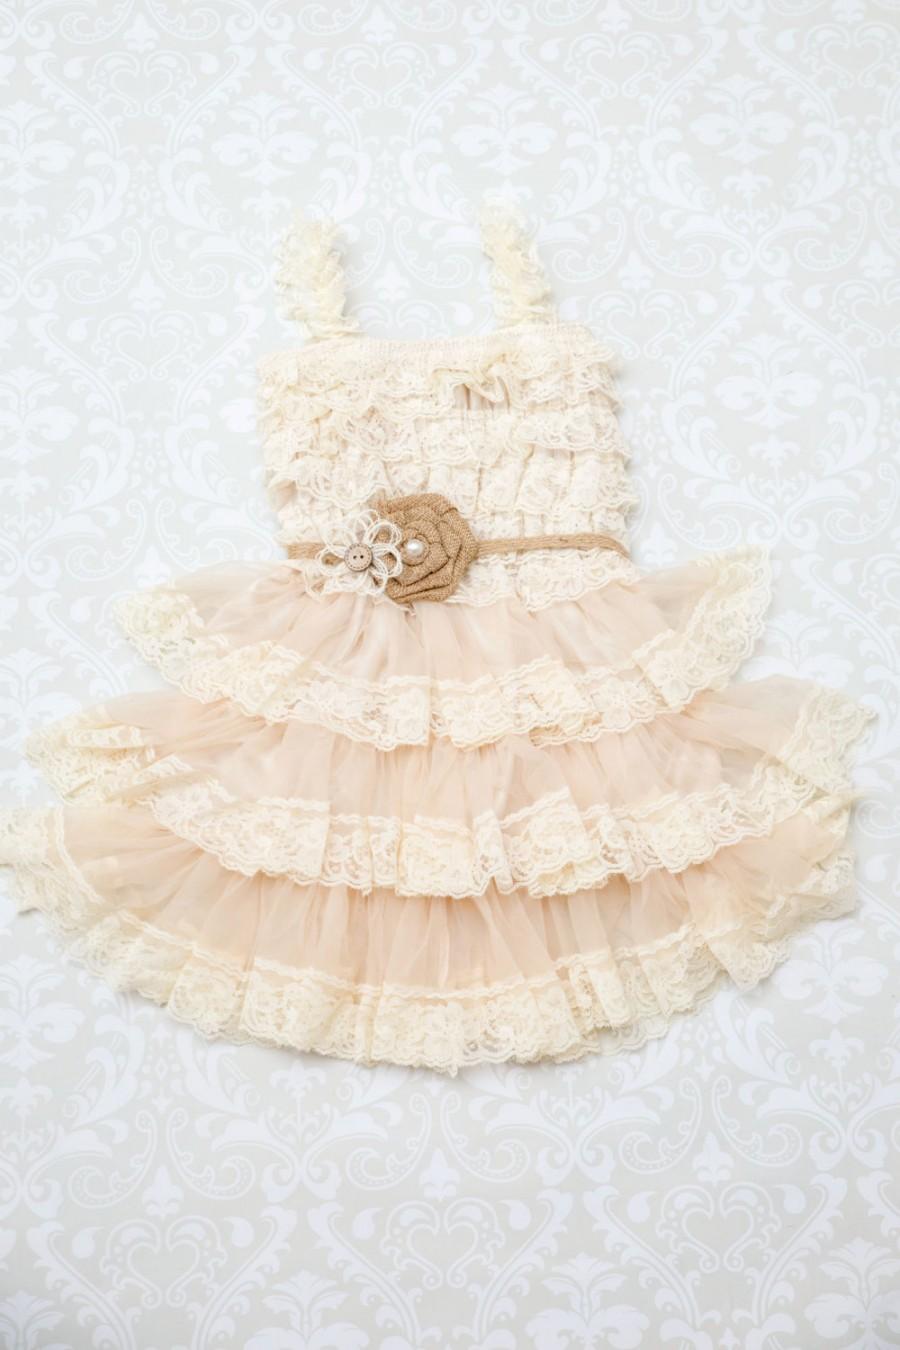 Wedding - Burlap Girls Dress, Rustic Flower Girl Dress, Farm Birthday Outfit, Country Baby Dress, Rustic Dress, Summer Dress, Chic Baby Dress